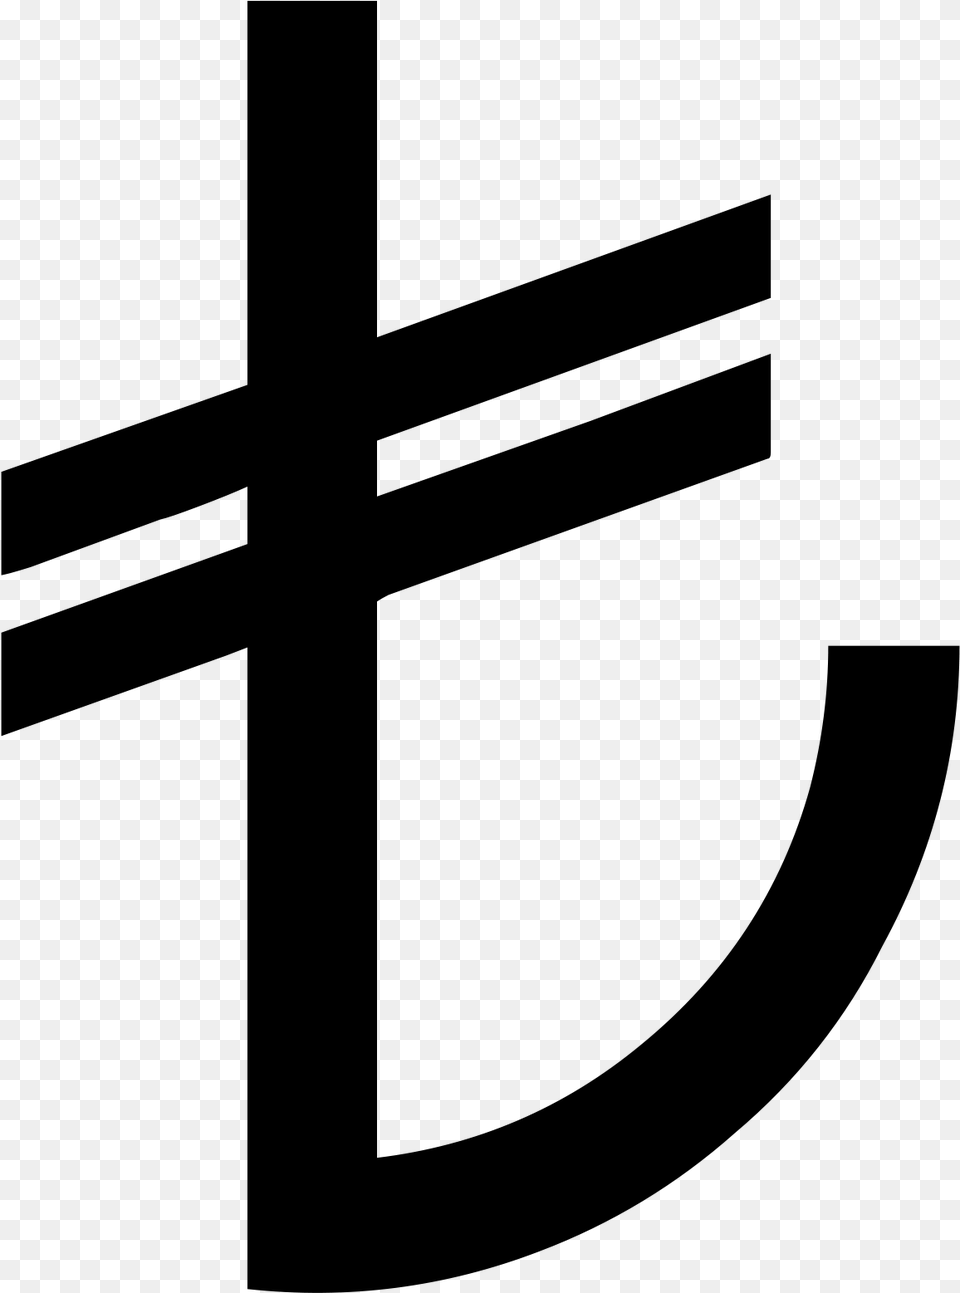 Turkish Lira Symbol, Gray Png Image